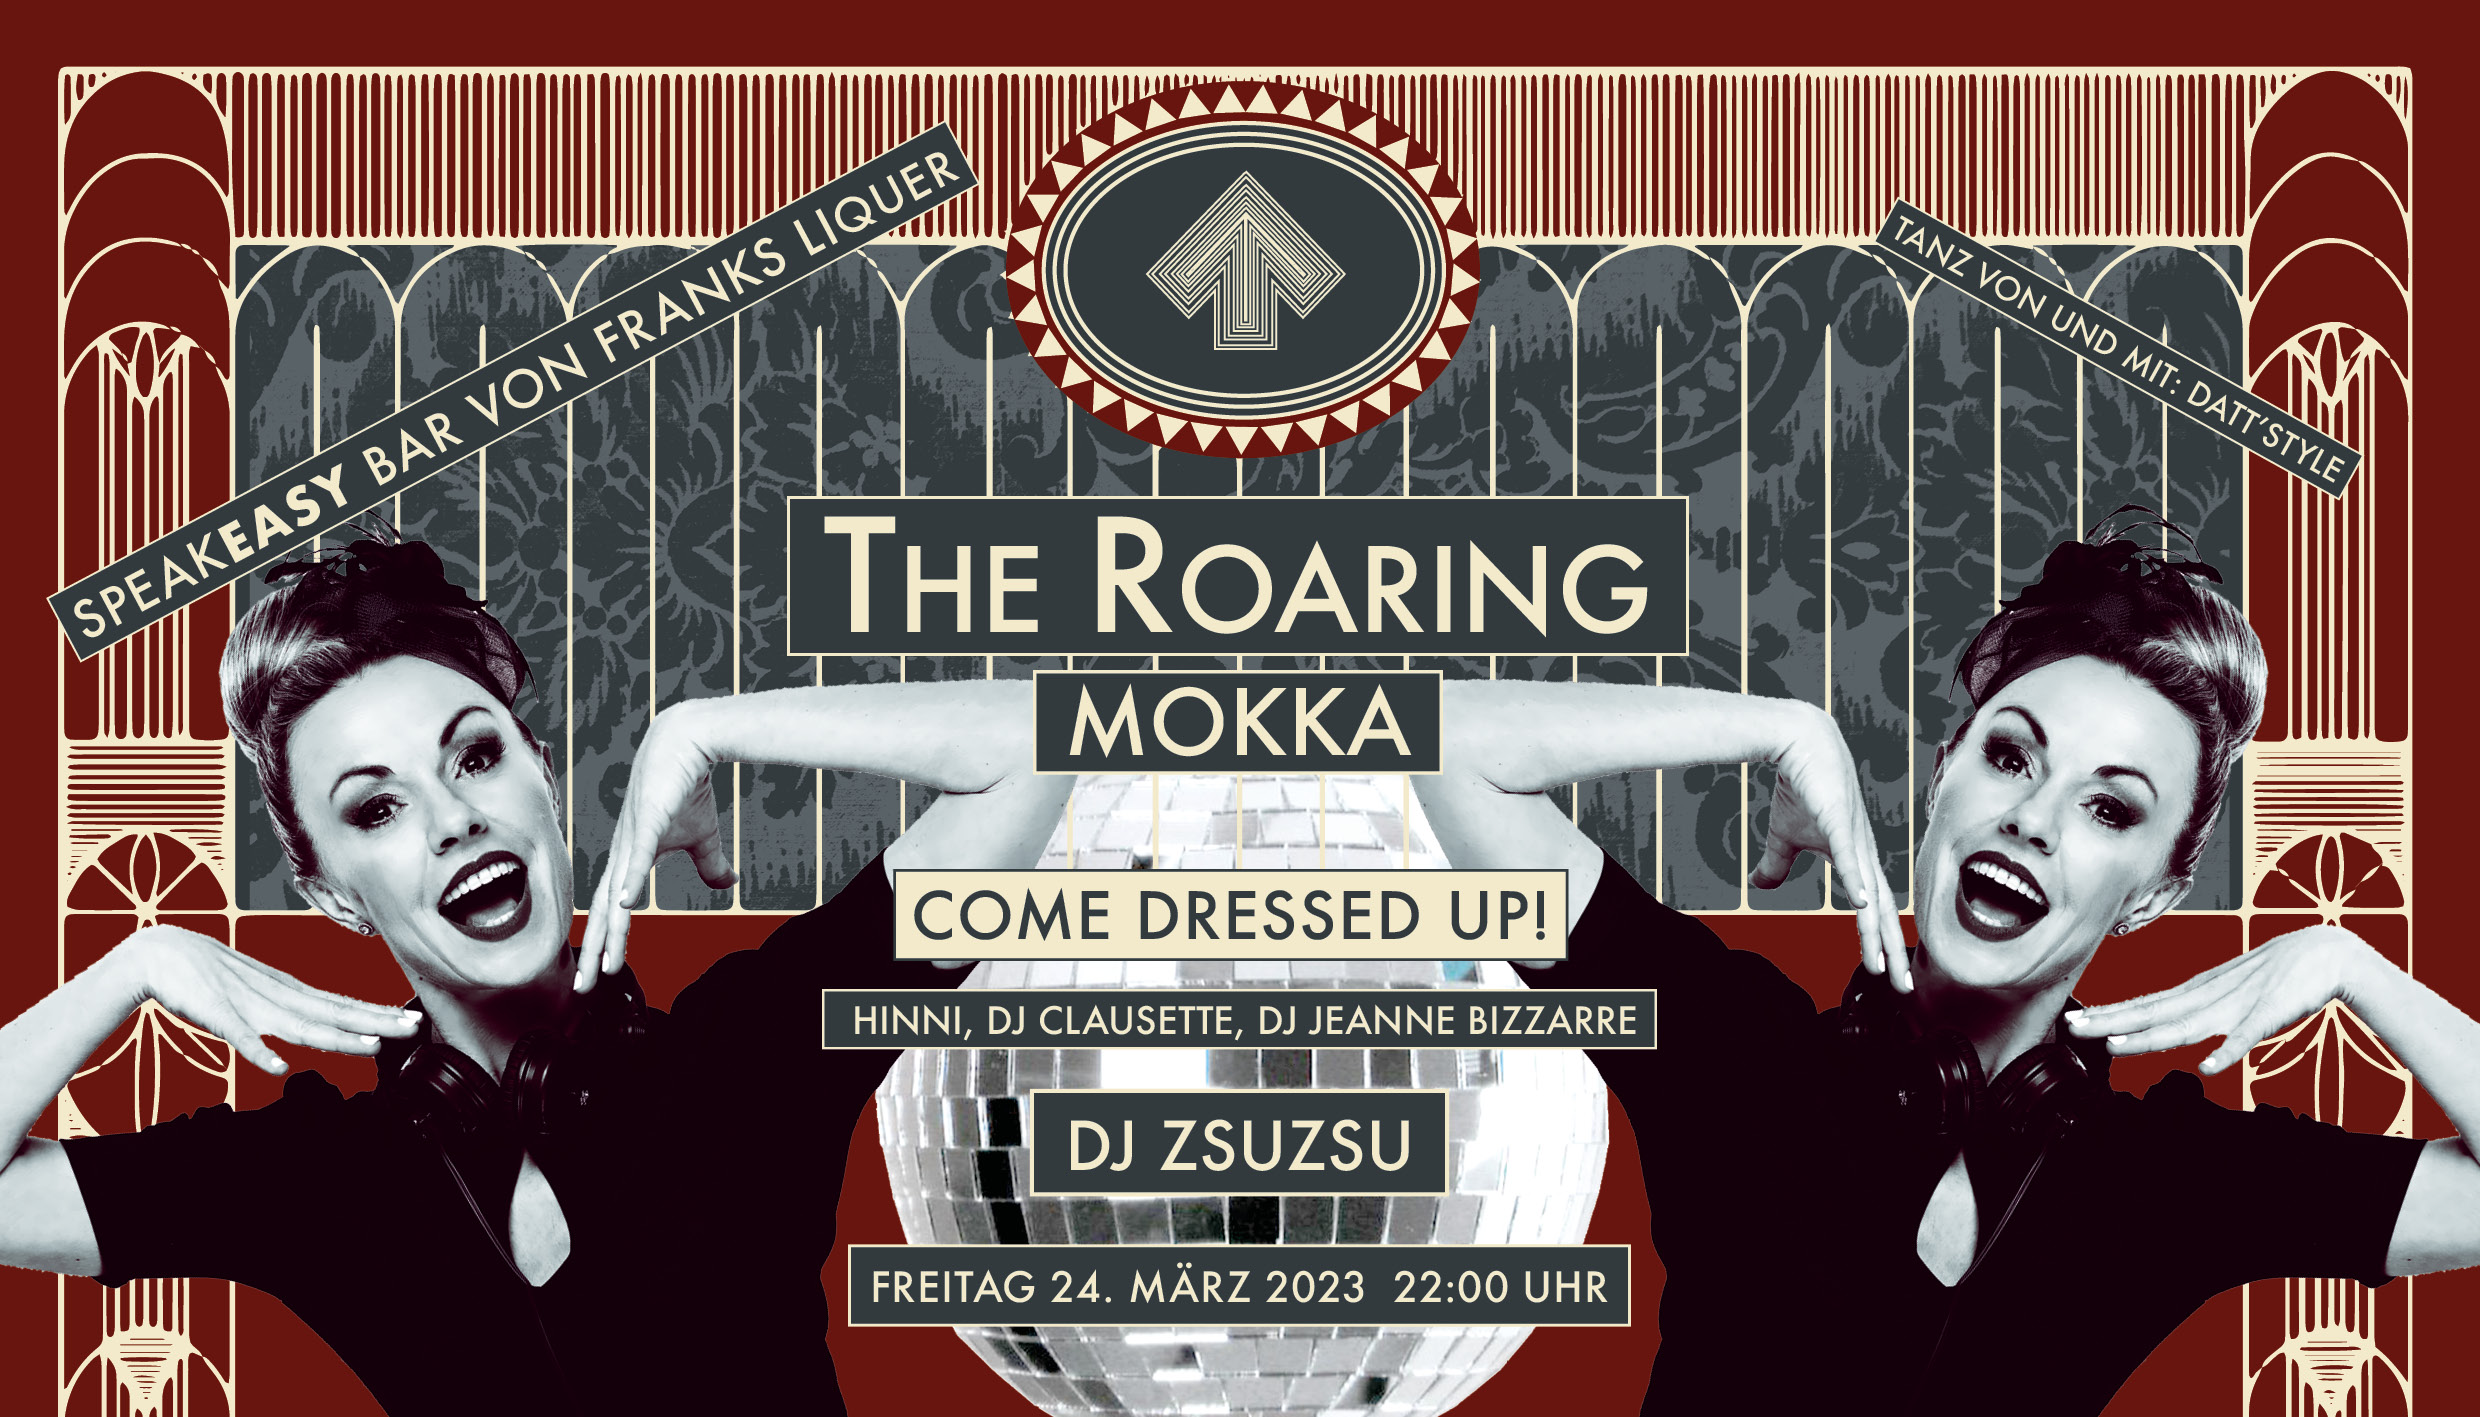 THE ROARING MOKKA